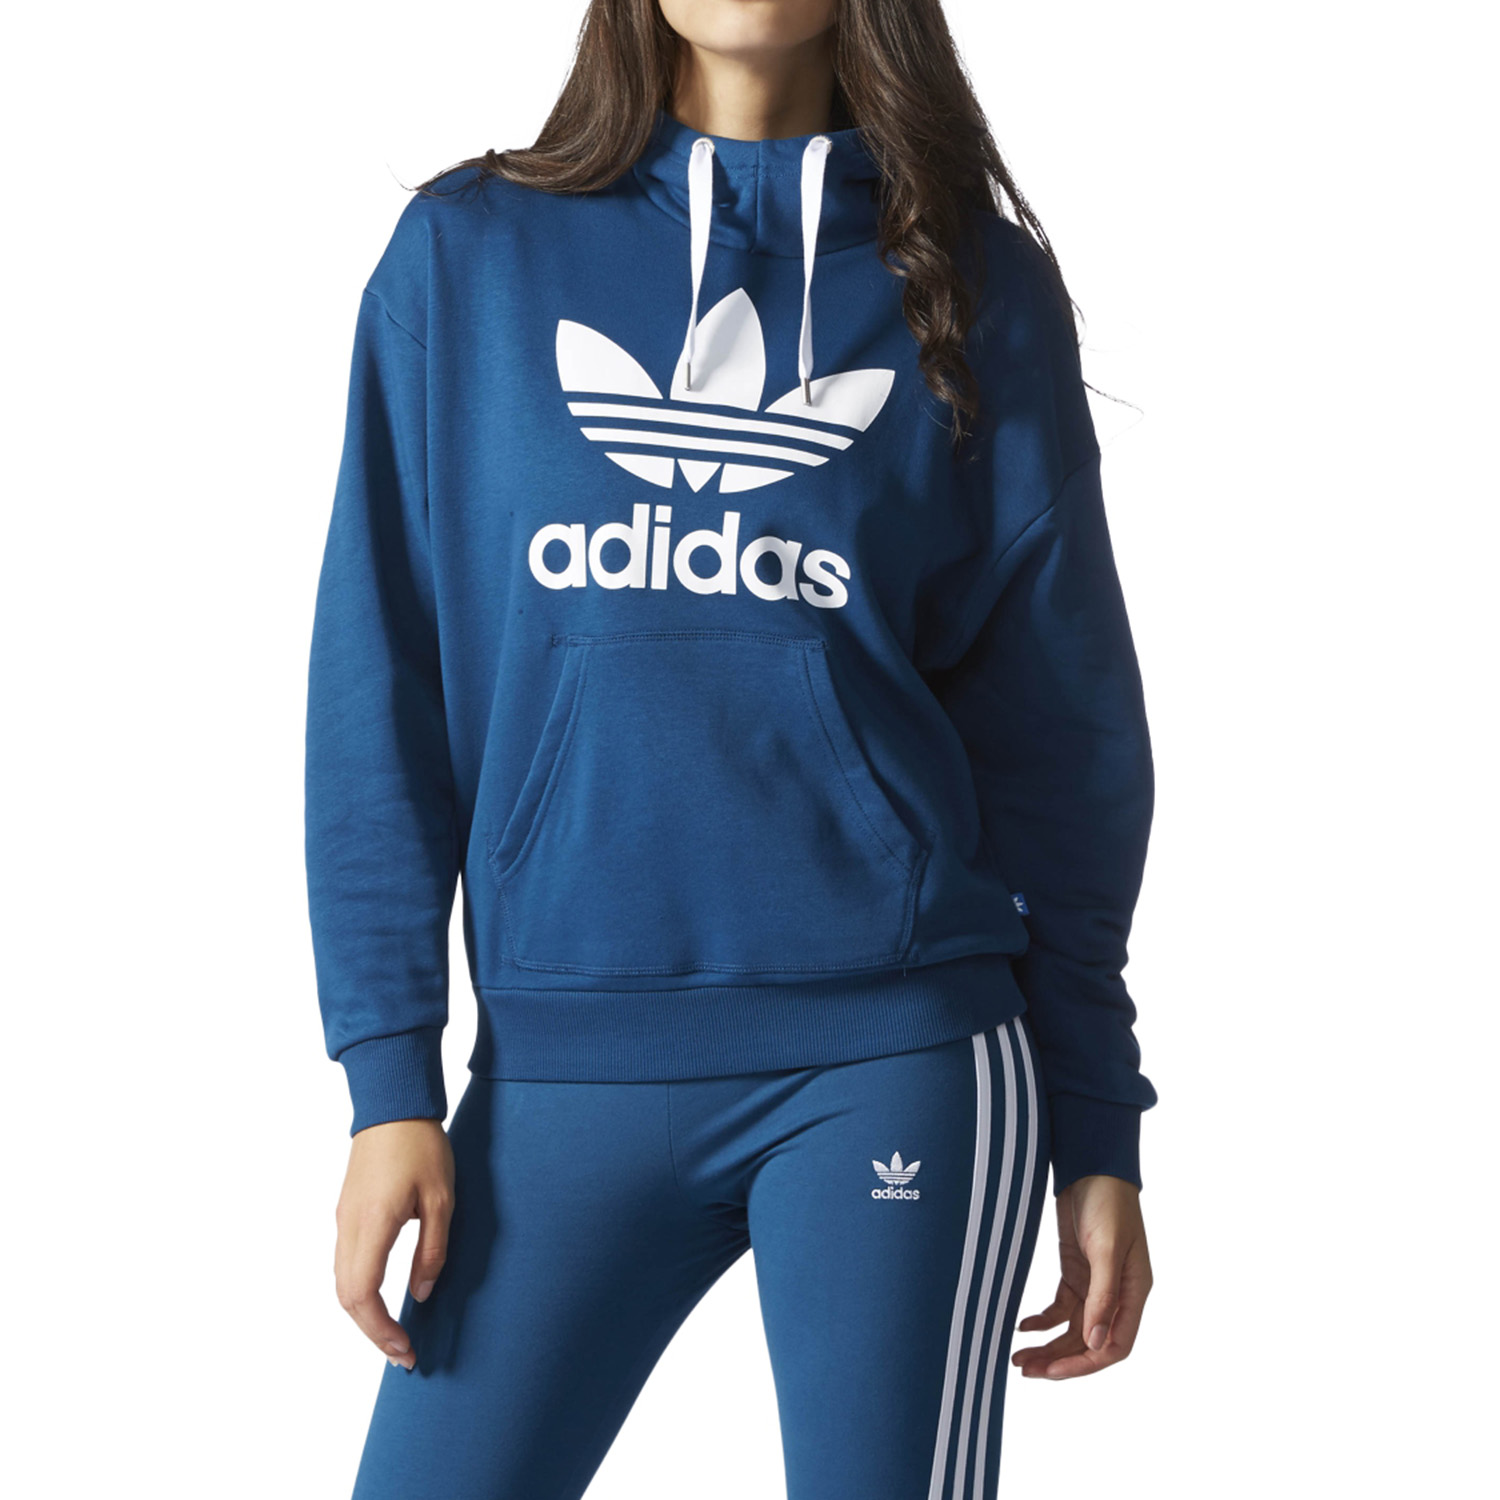 Adidas Originals Trefoil Longsleeve Women's Hoodie Blue/White ay8111 | eBay